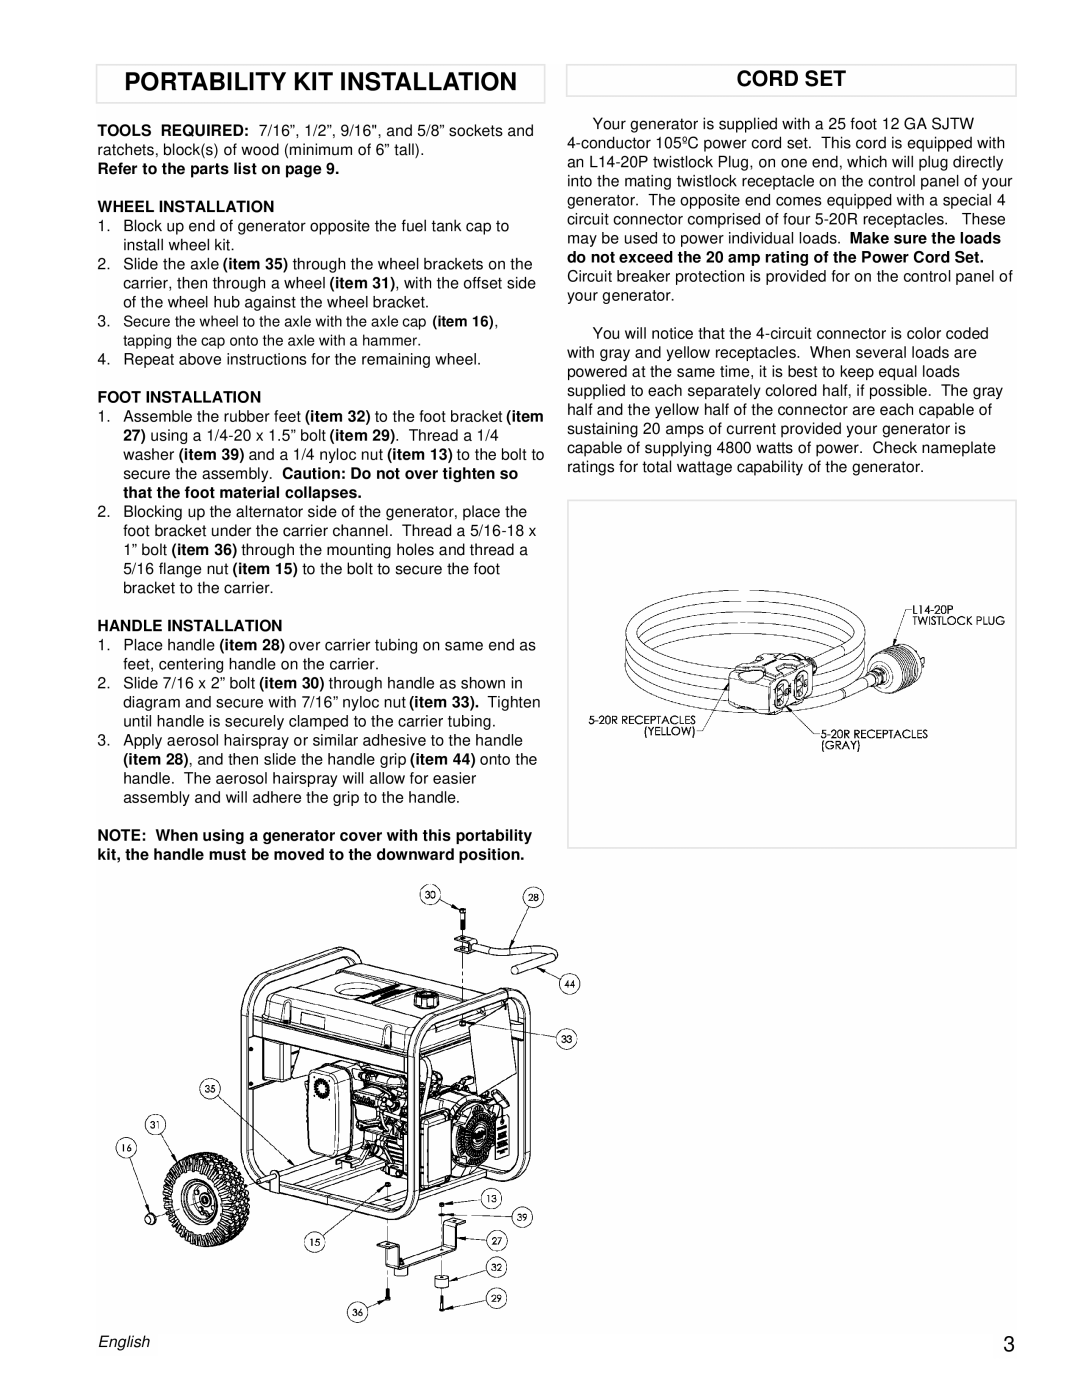 Powermate PM0435253 manual Portability Kit Installation, Cord Set, English 